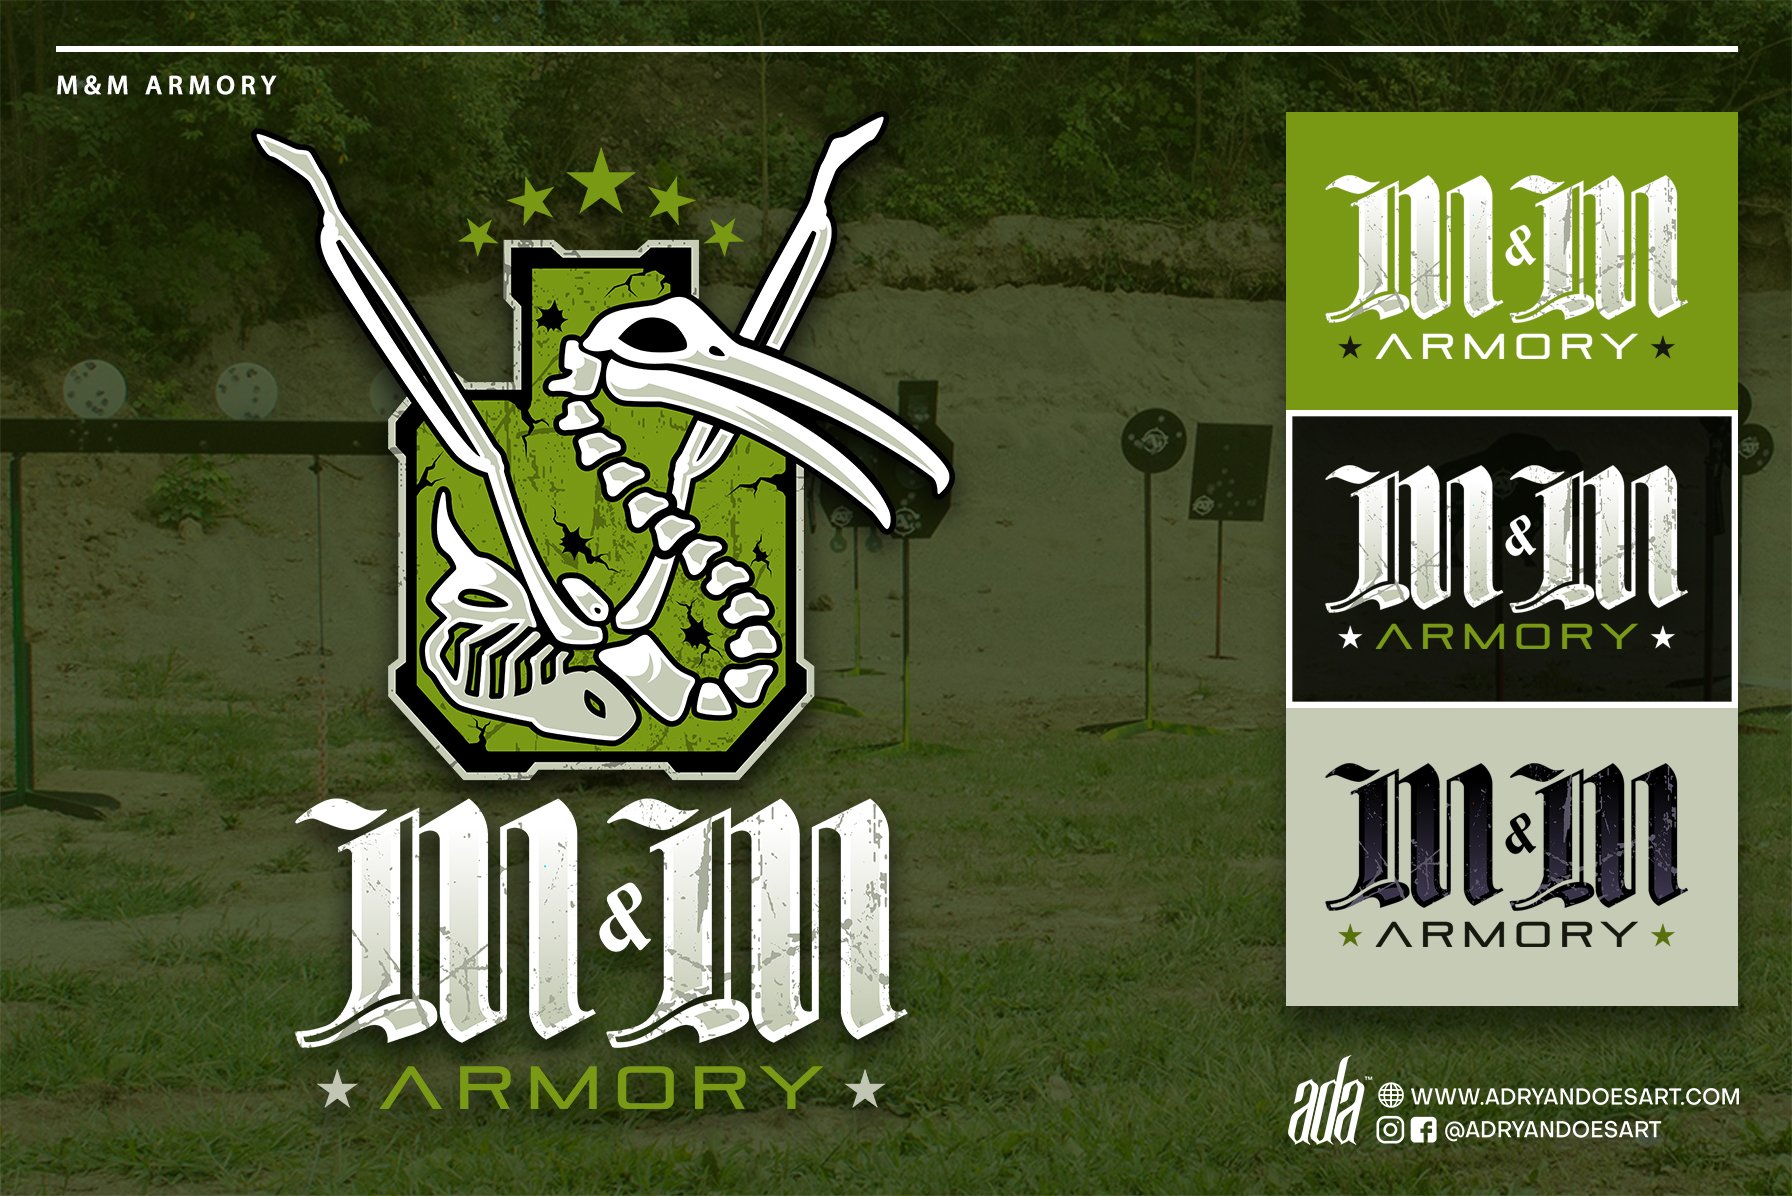 ADA-Website_Slideshow-Logos_MM-ARMORY.jpg